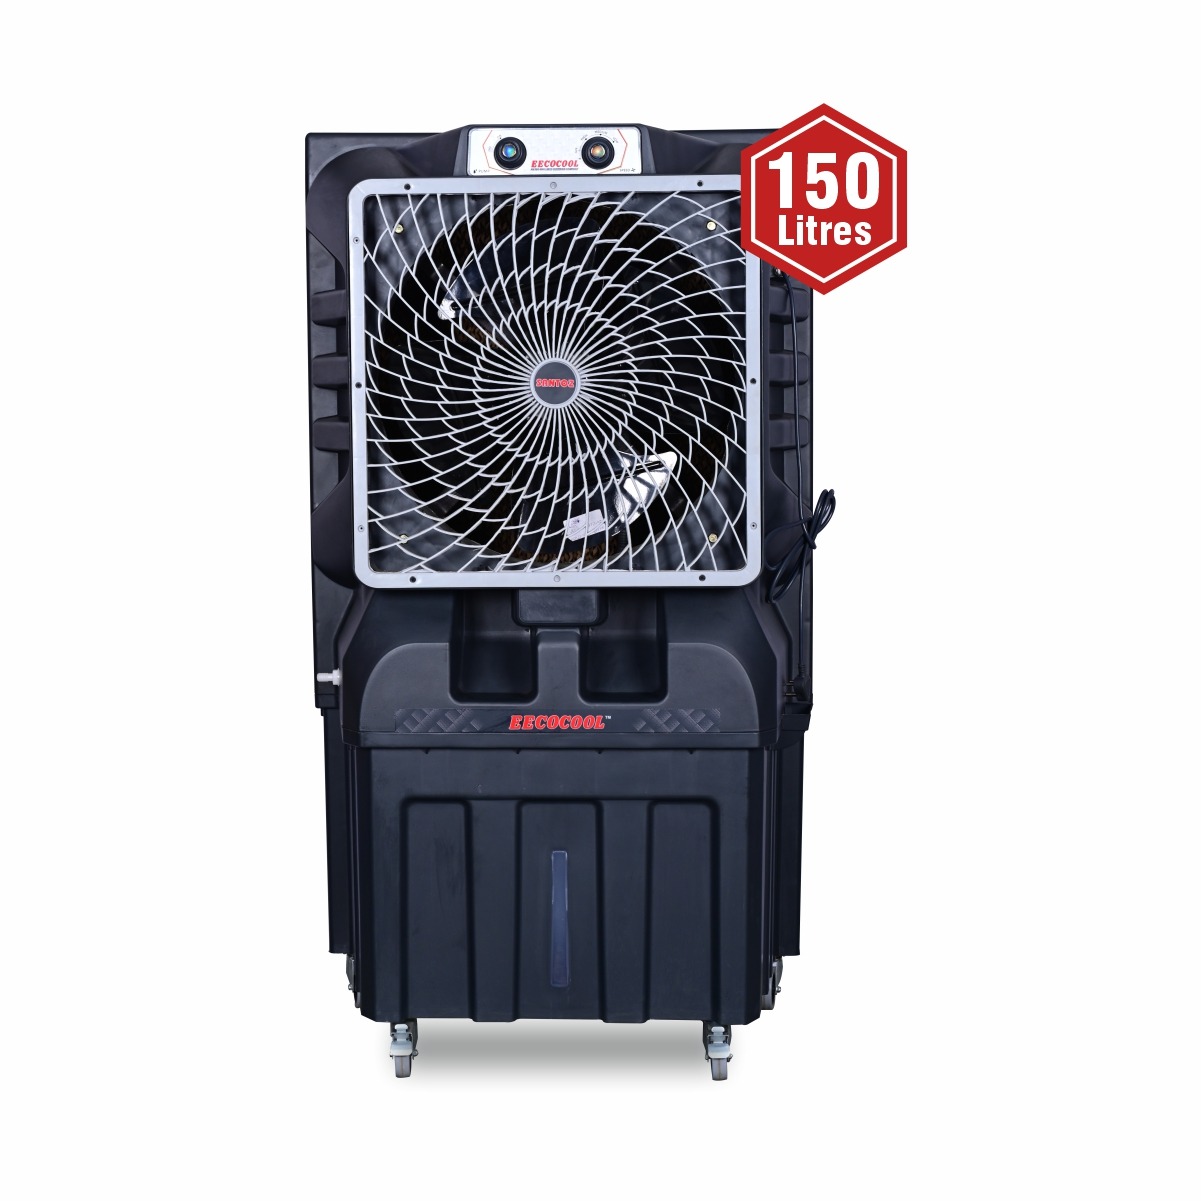 Eecocool Santoz 150 Litre Desert Air Cooler